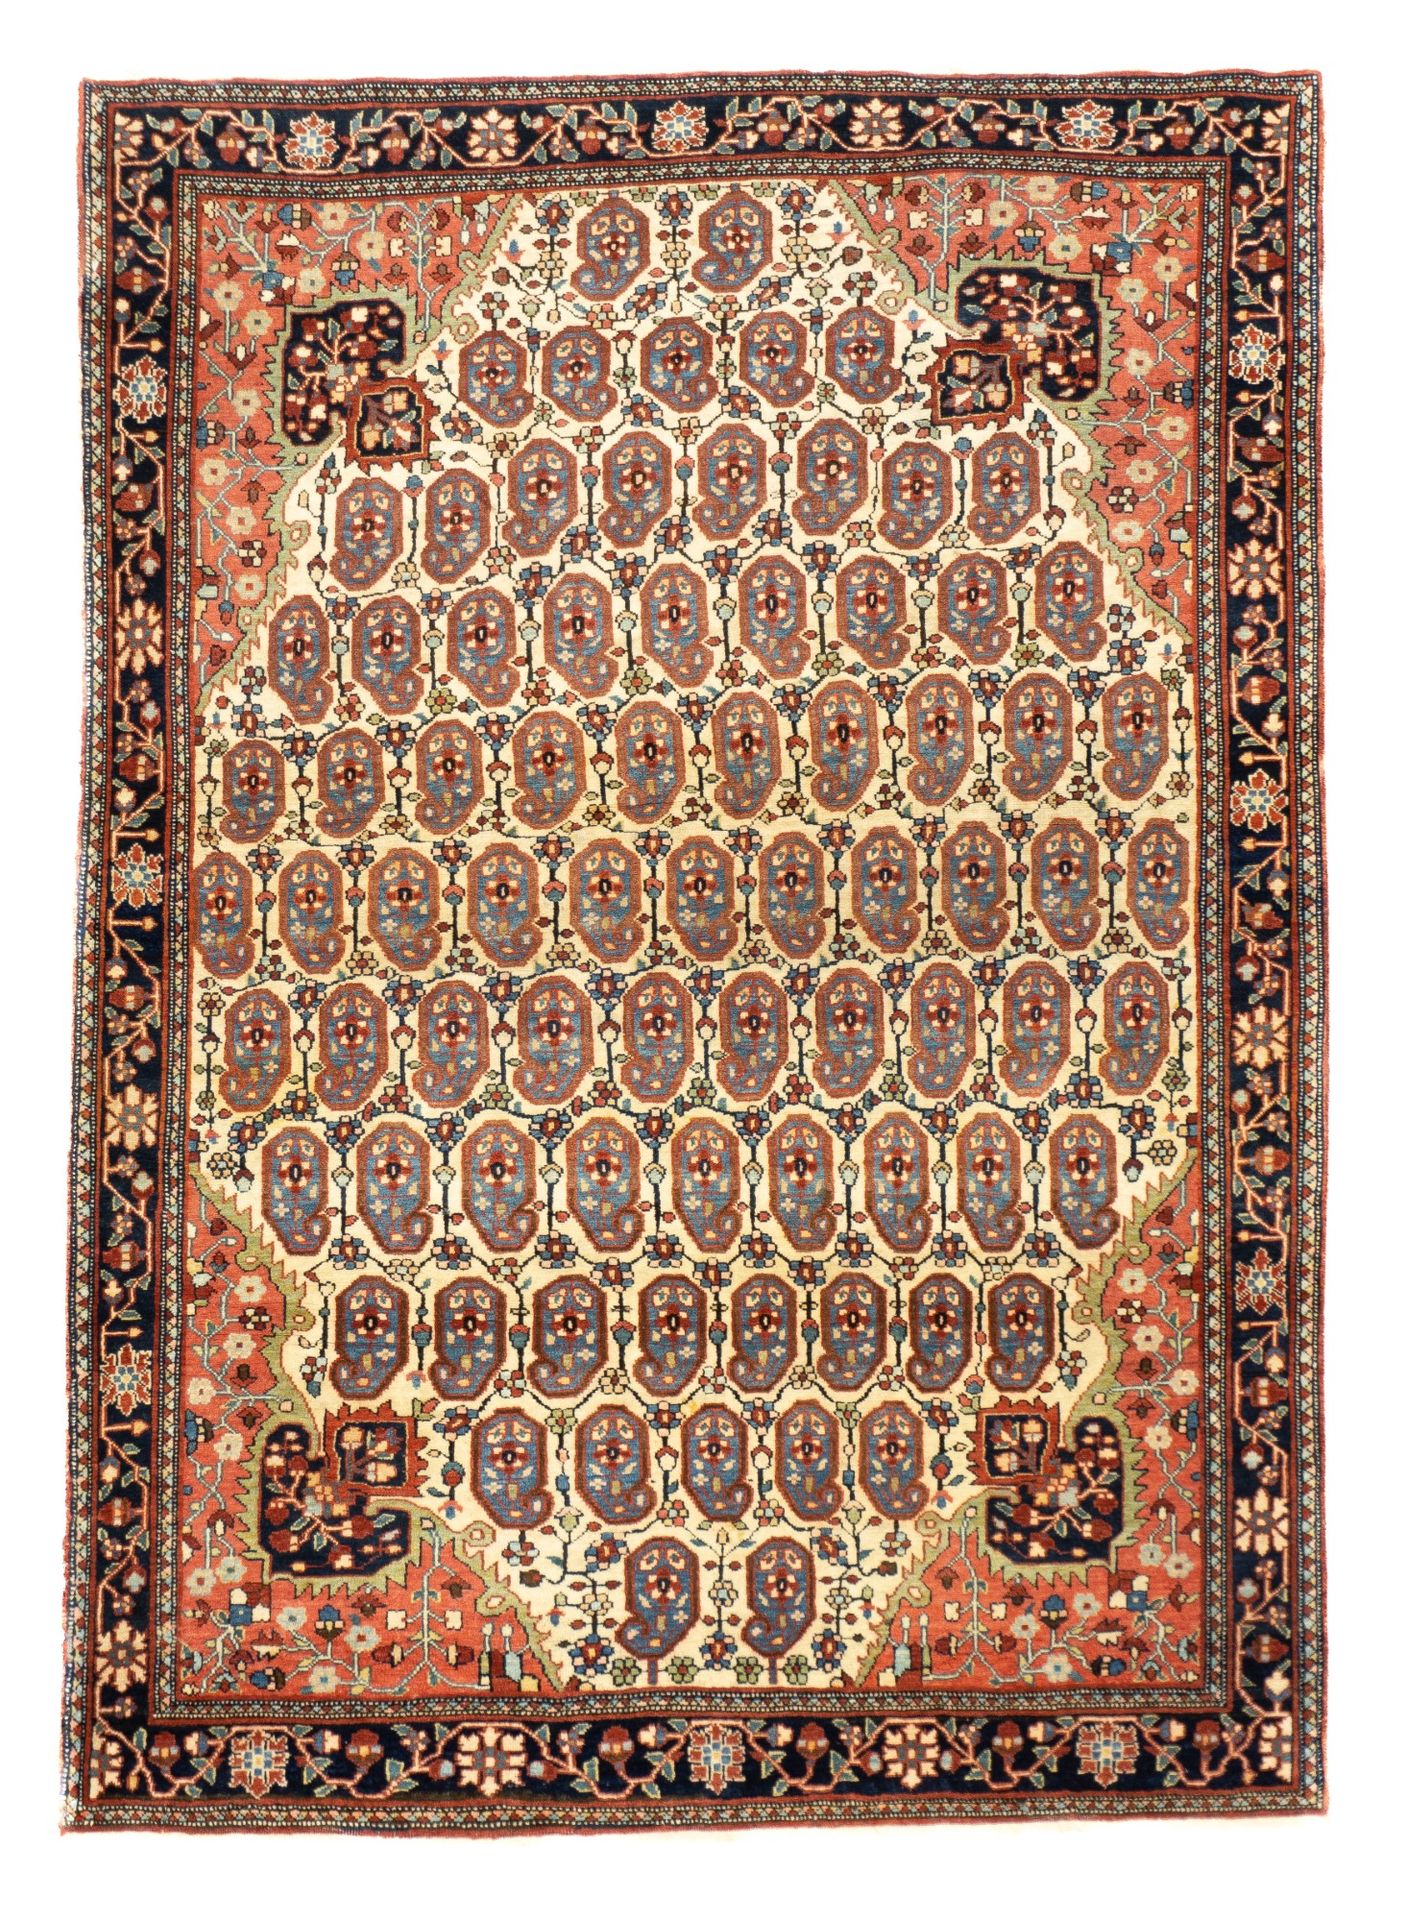 Null Antique Farahan Sarouk Rug, 3'8" x 5' ( 1.12 x 1.52 M )